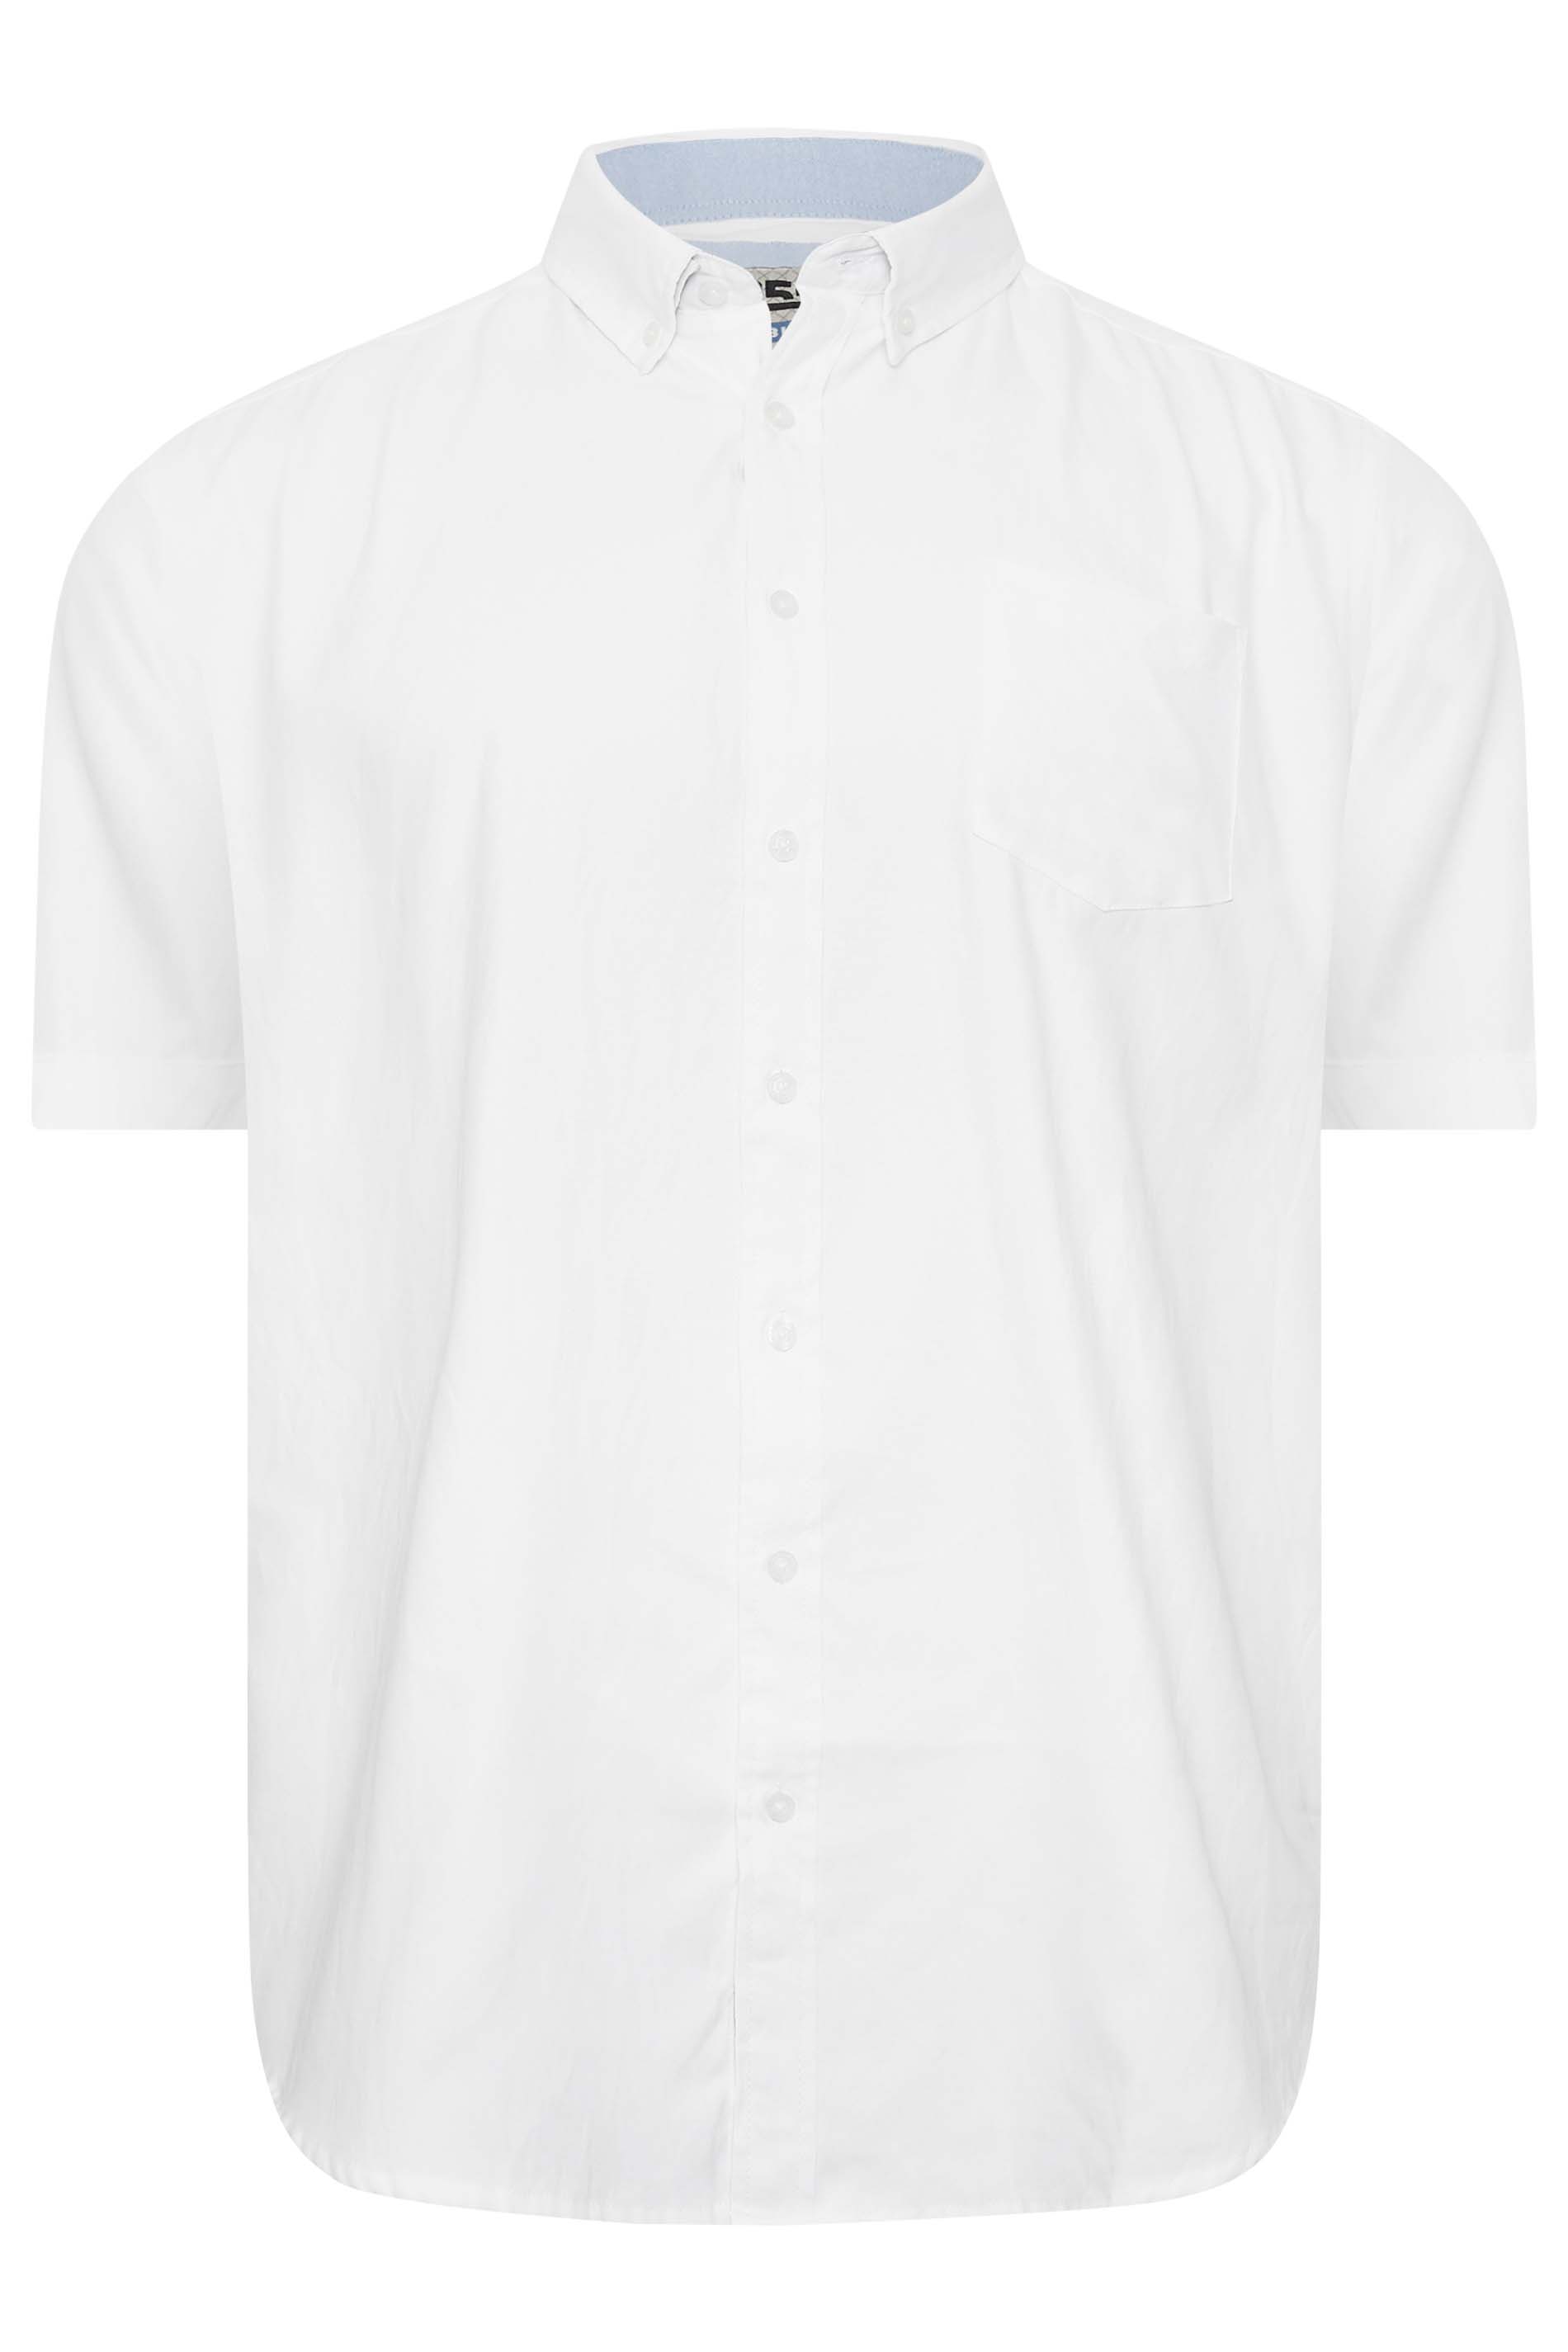 D555 Big & Tall White Short Sleeve Shirt | BadRhino 3